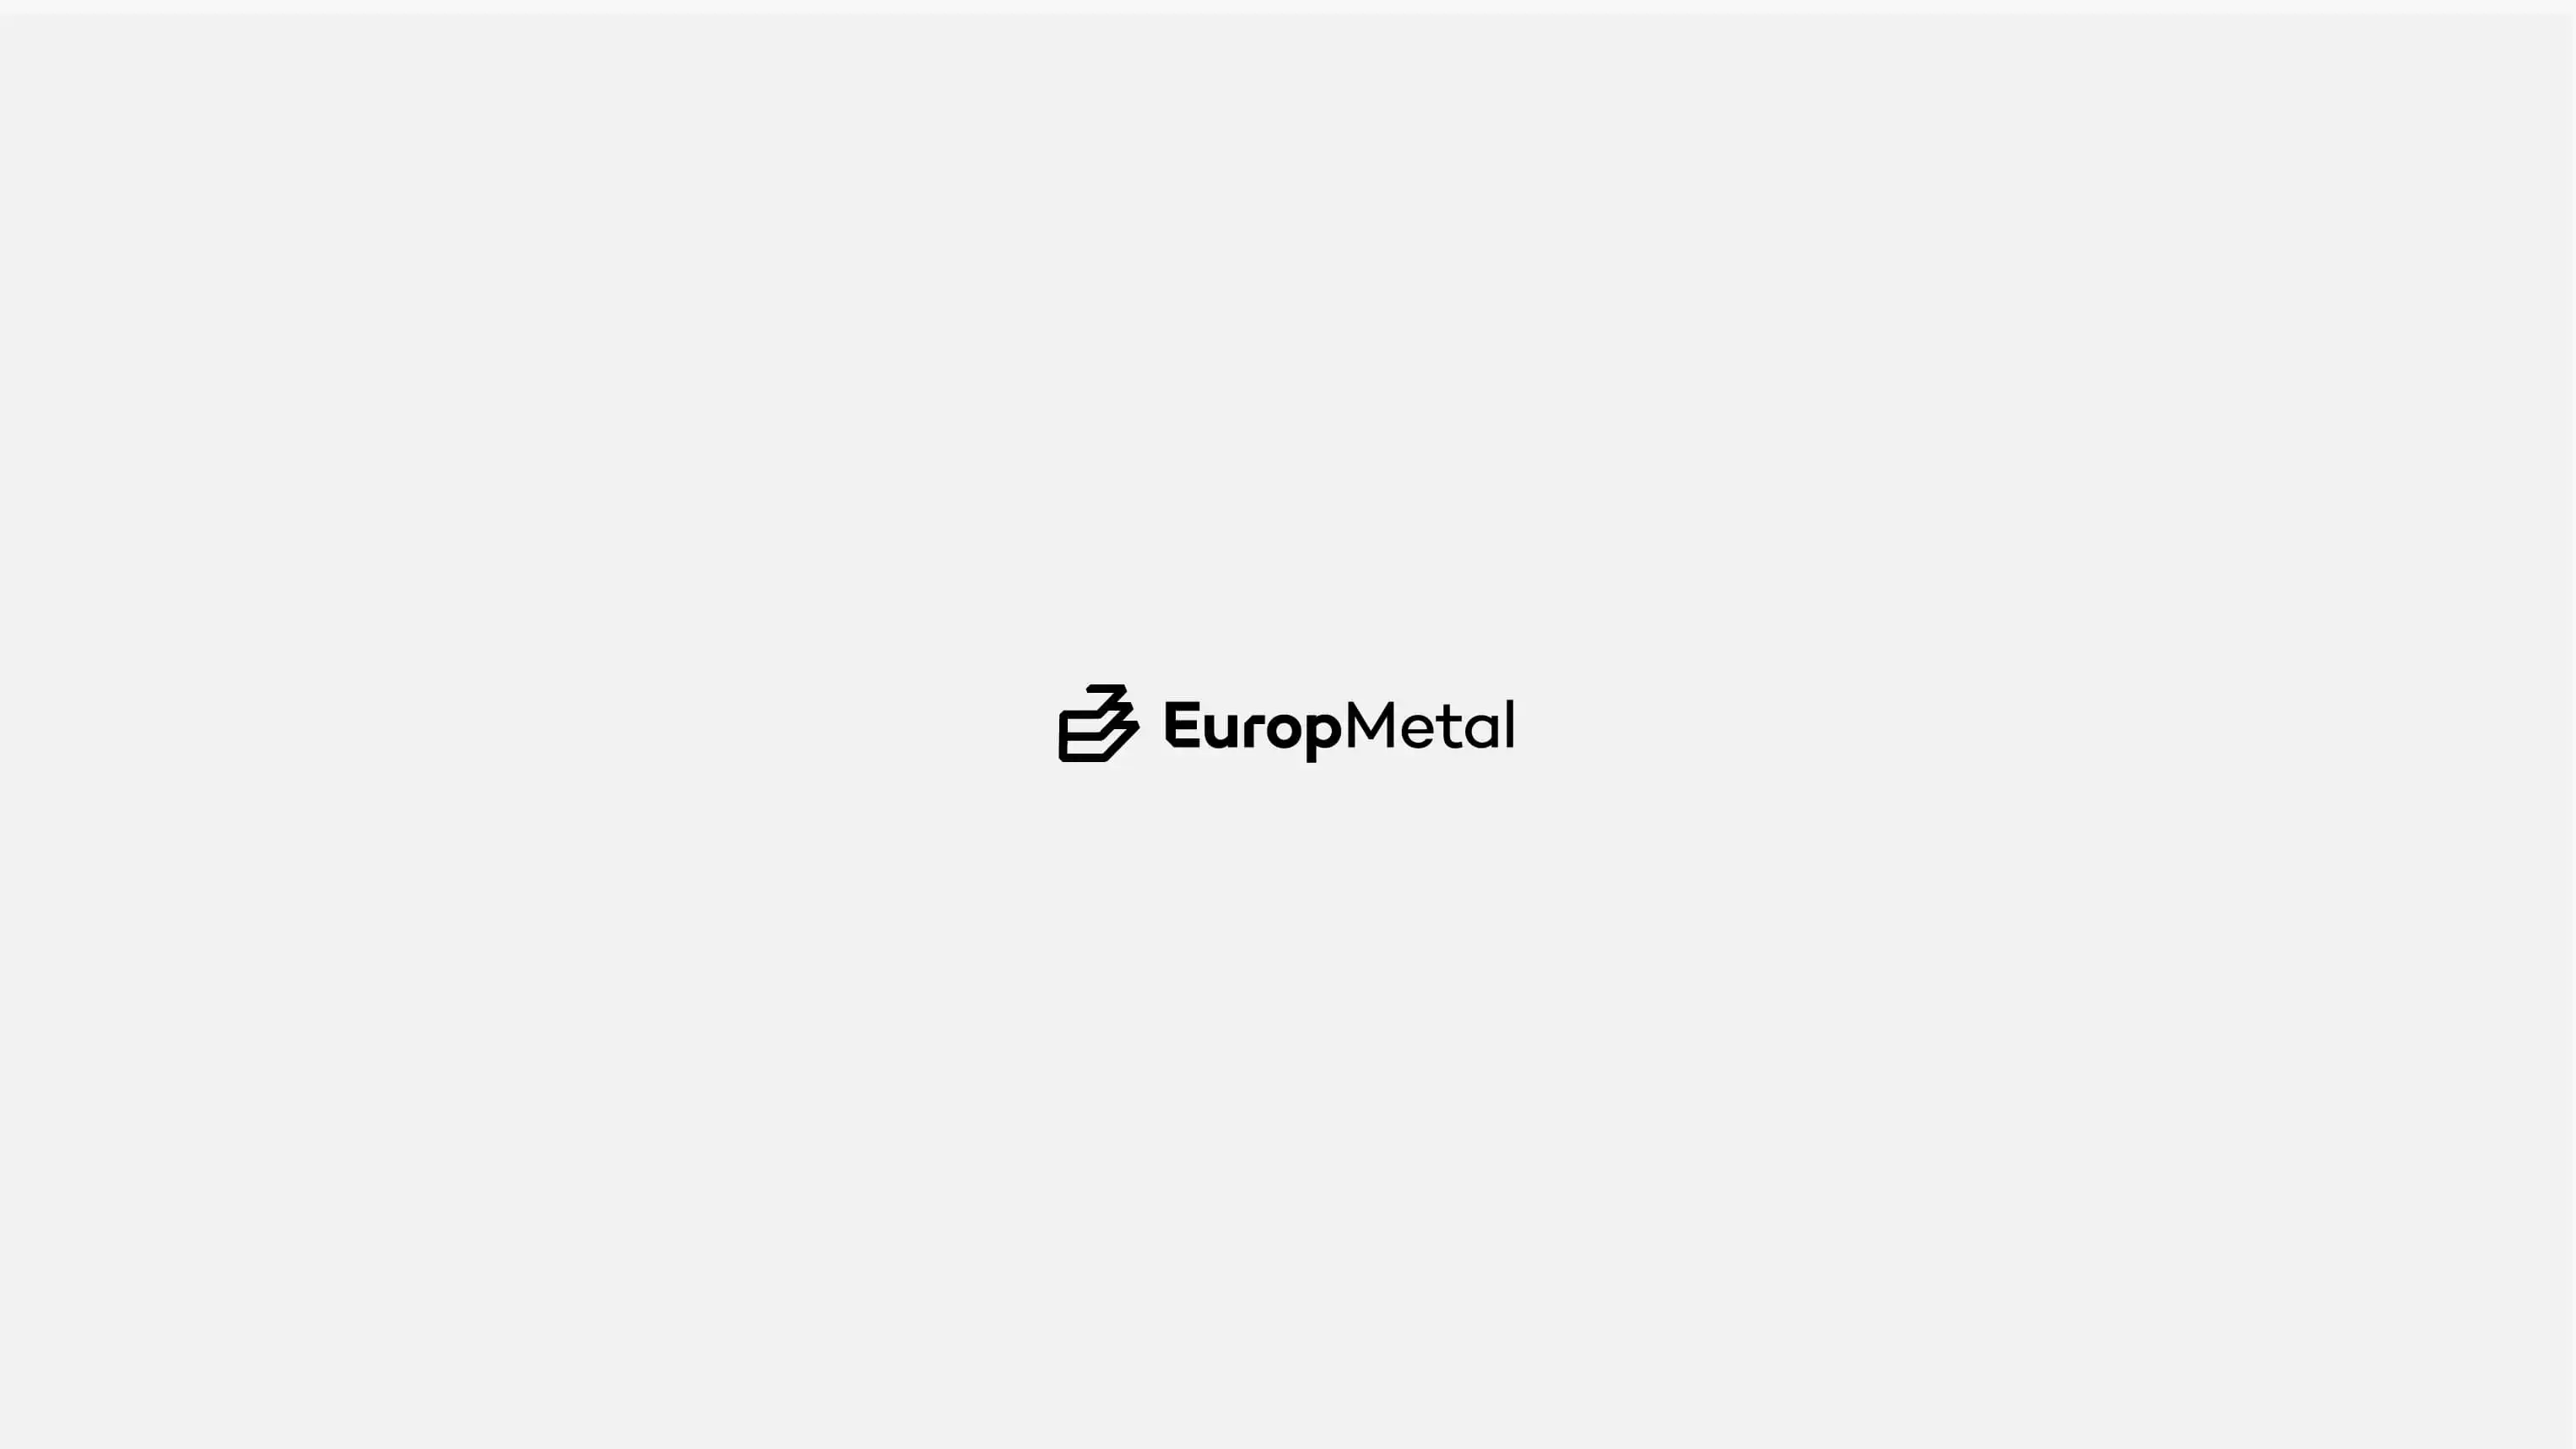 EuropMetal's logotype